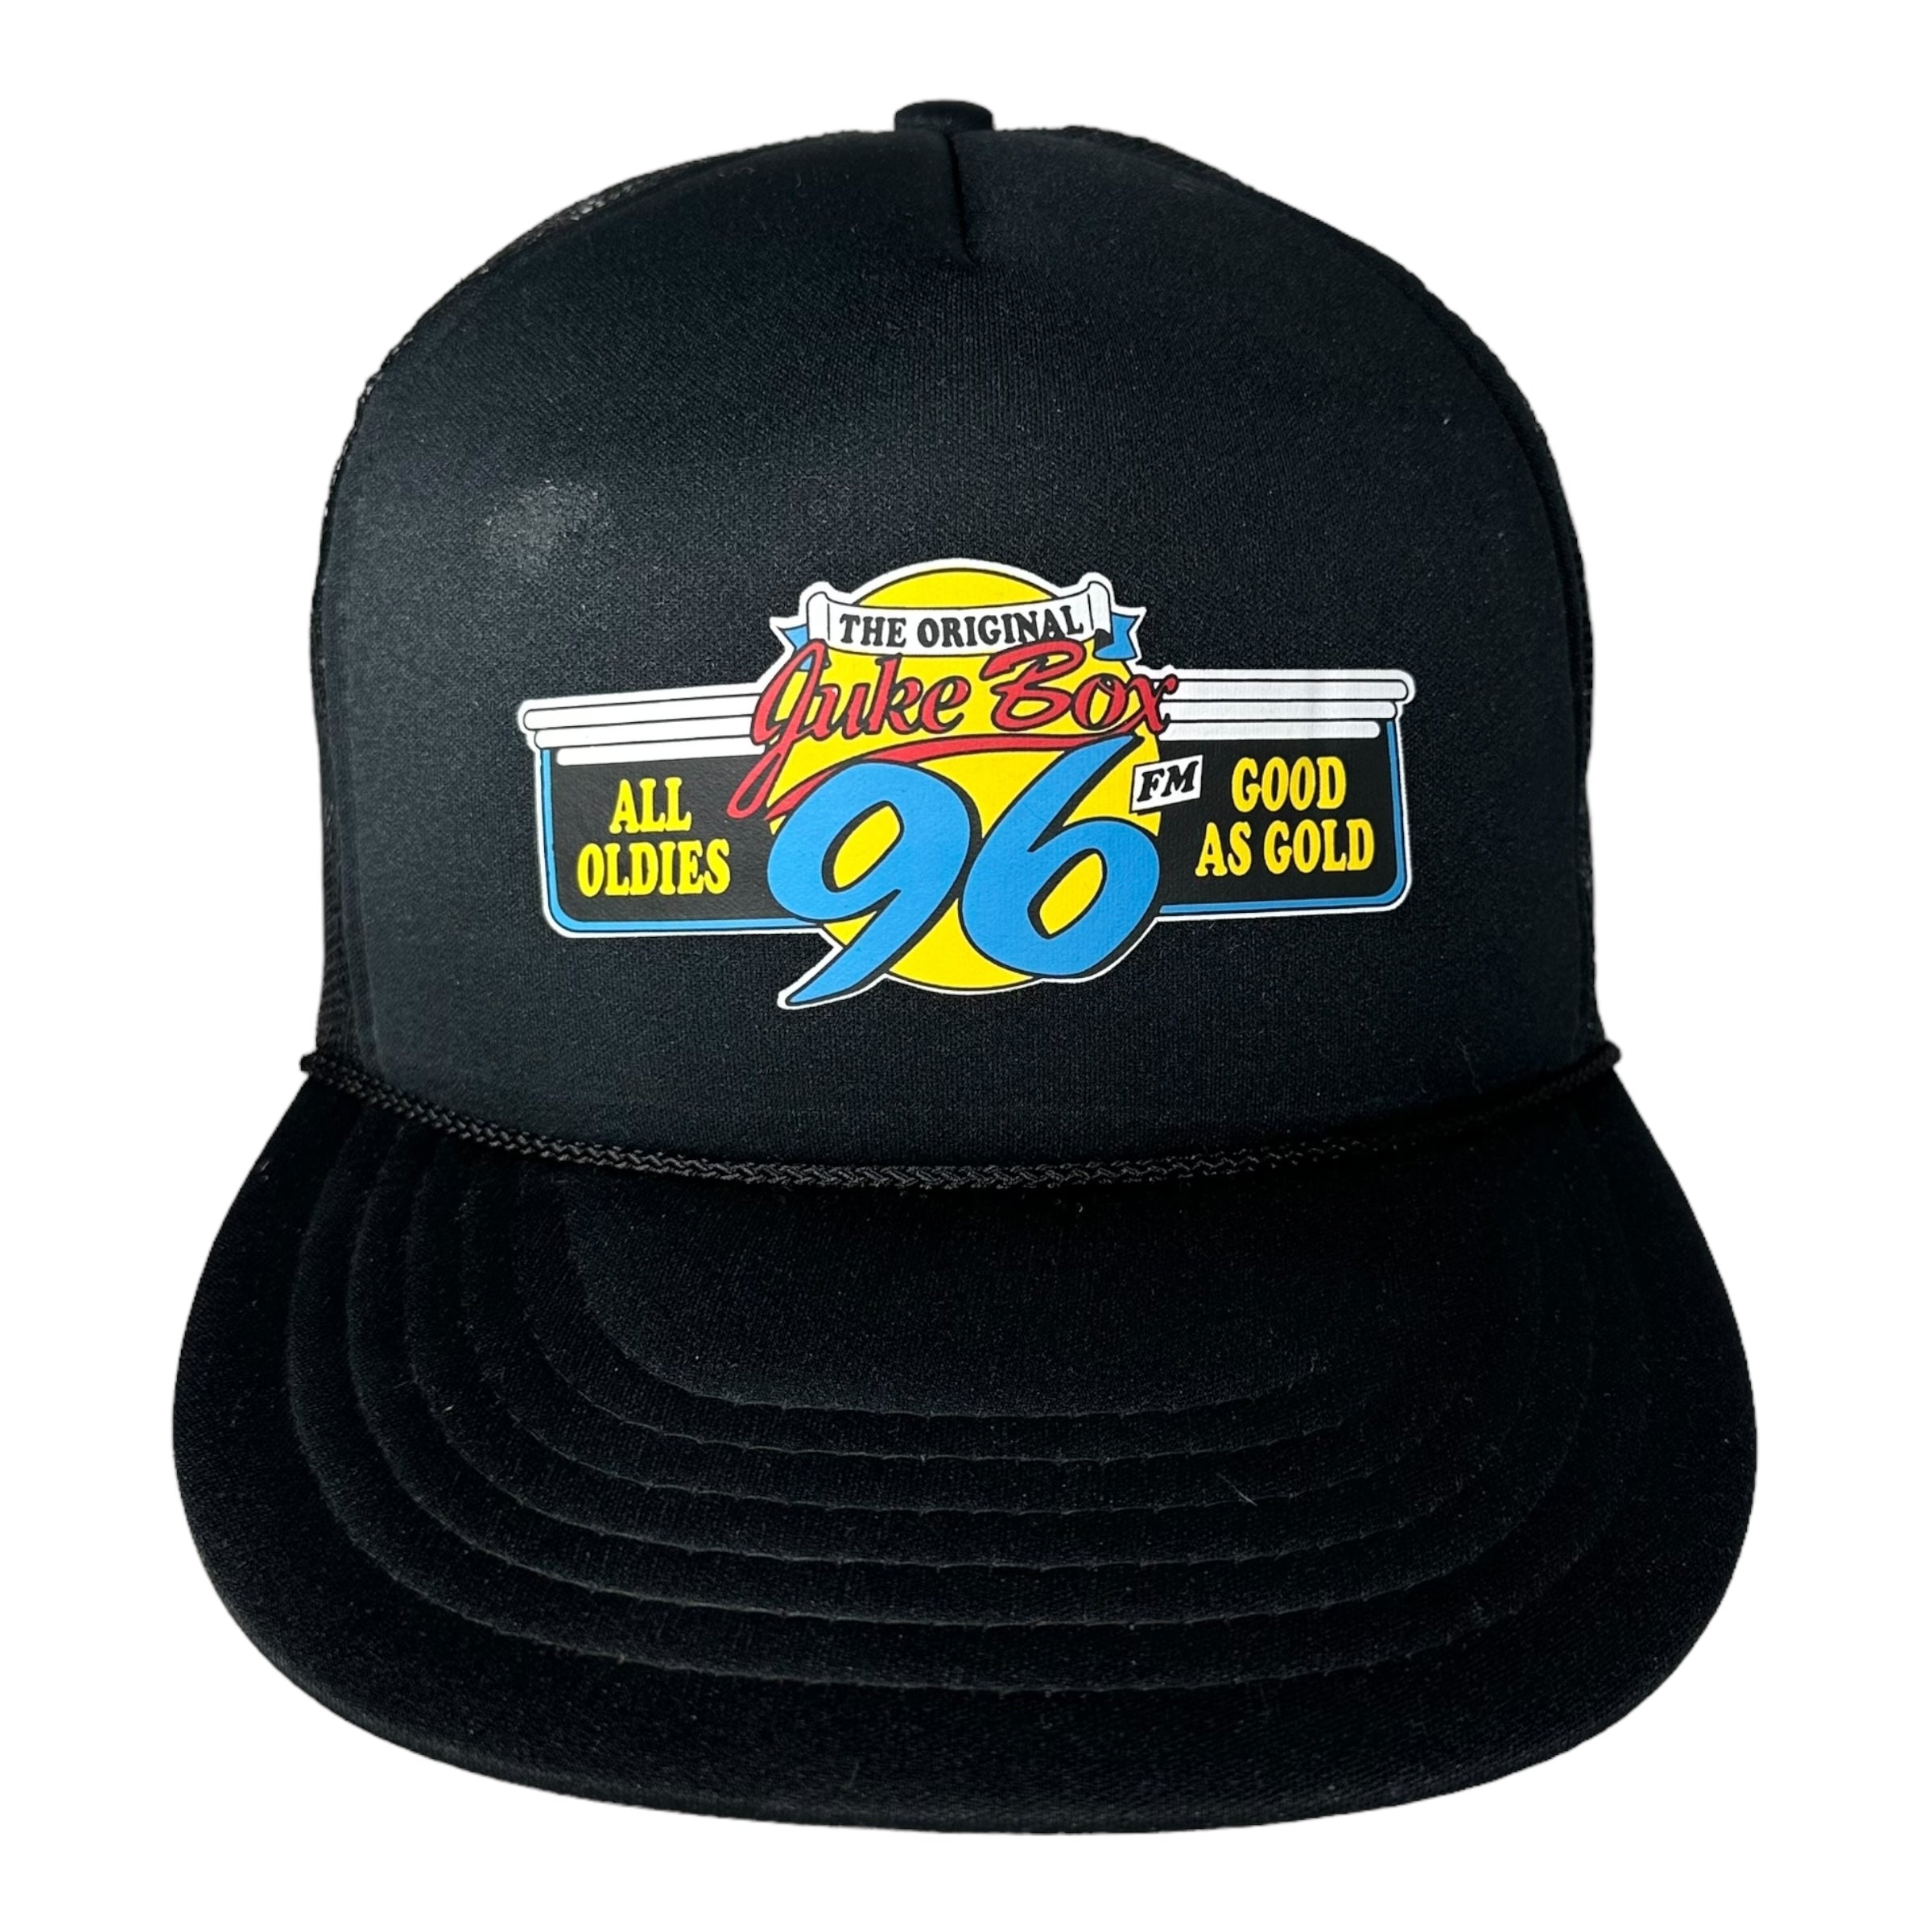 Vintage Juke Box 96 FM Rope Lace Brim Snapback Trucker Hat